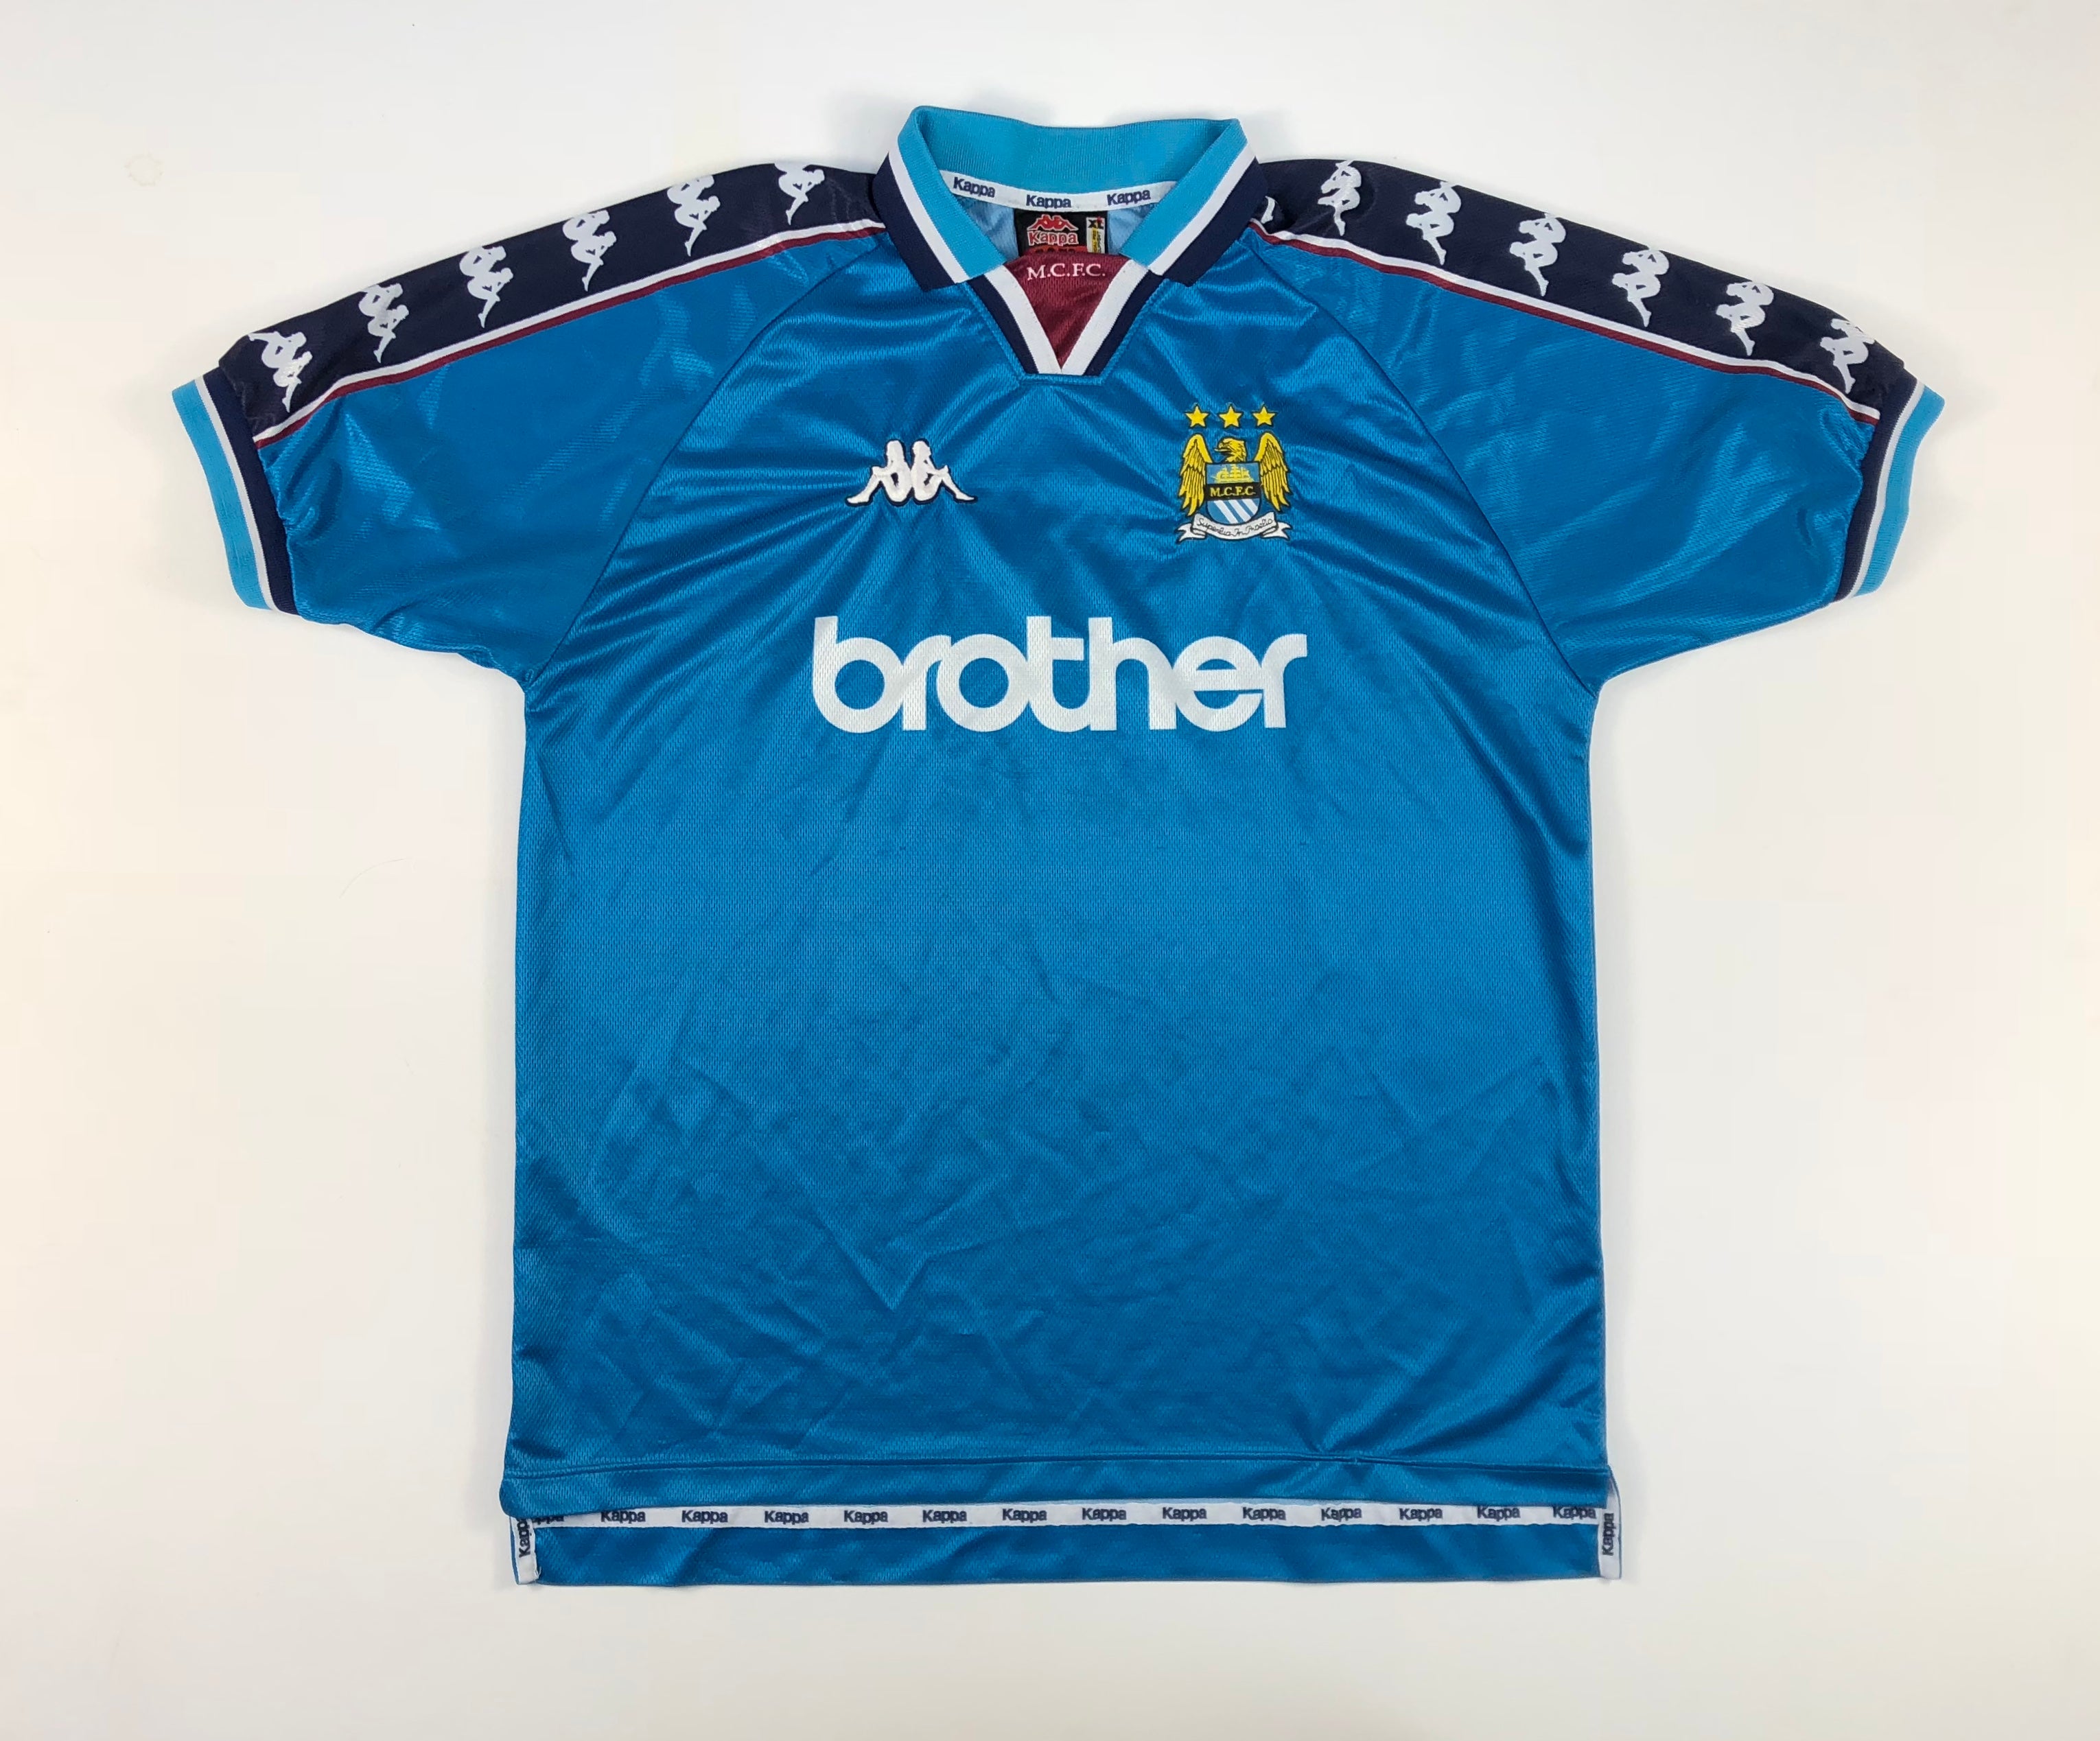 Kits - Buy Manchester City Shirts | Classic Football Kits